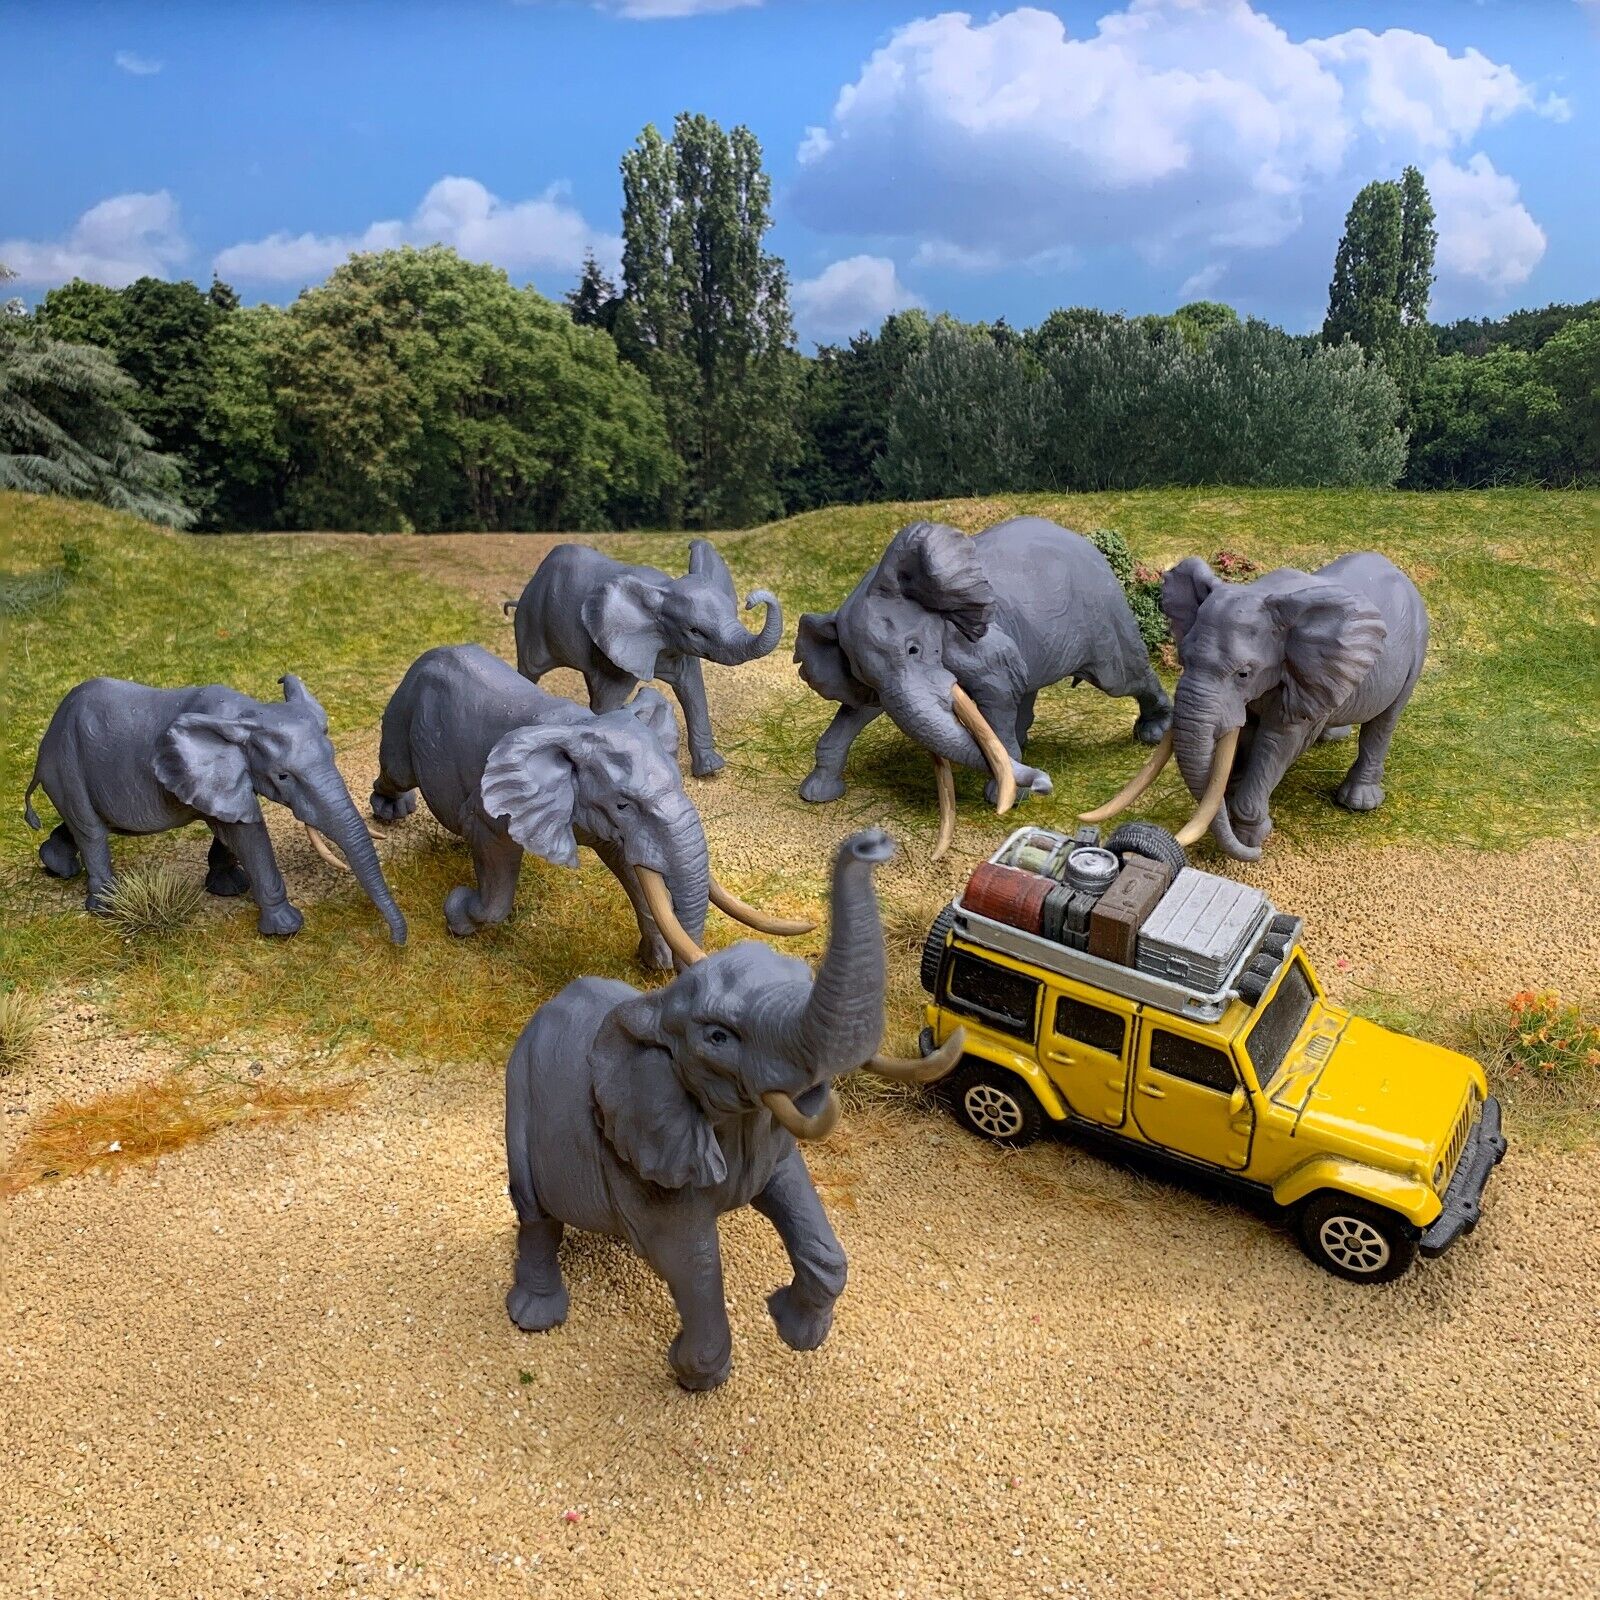 1/64 scale zoo diorama herd of elephants figures Hot Wheels size